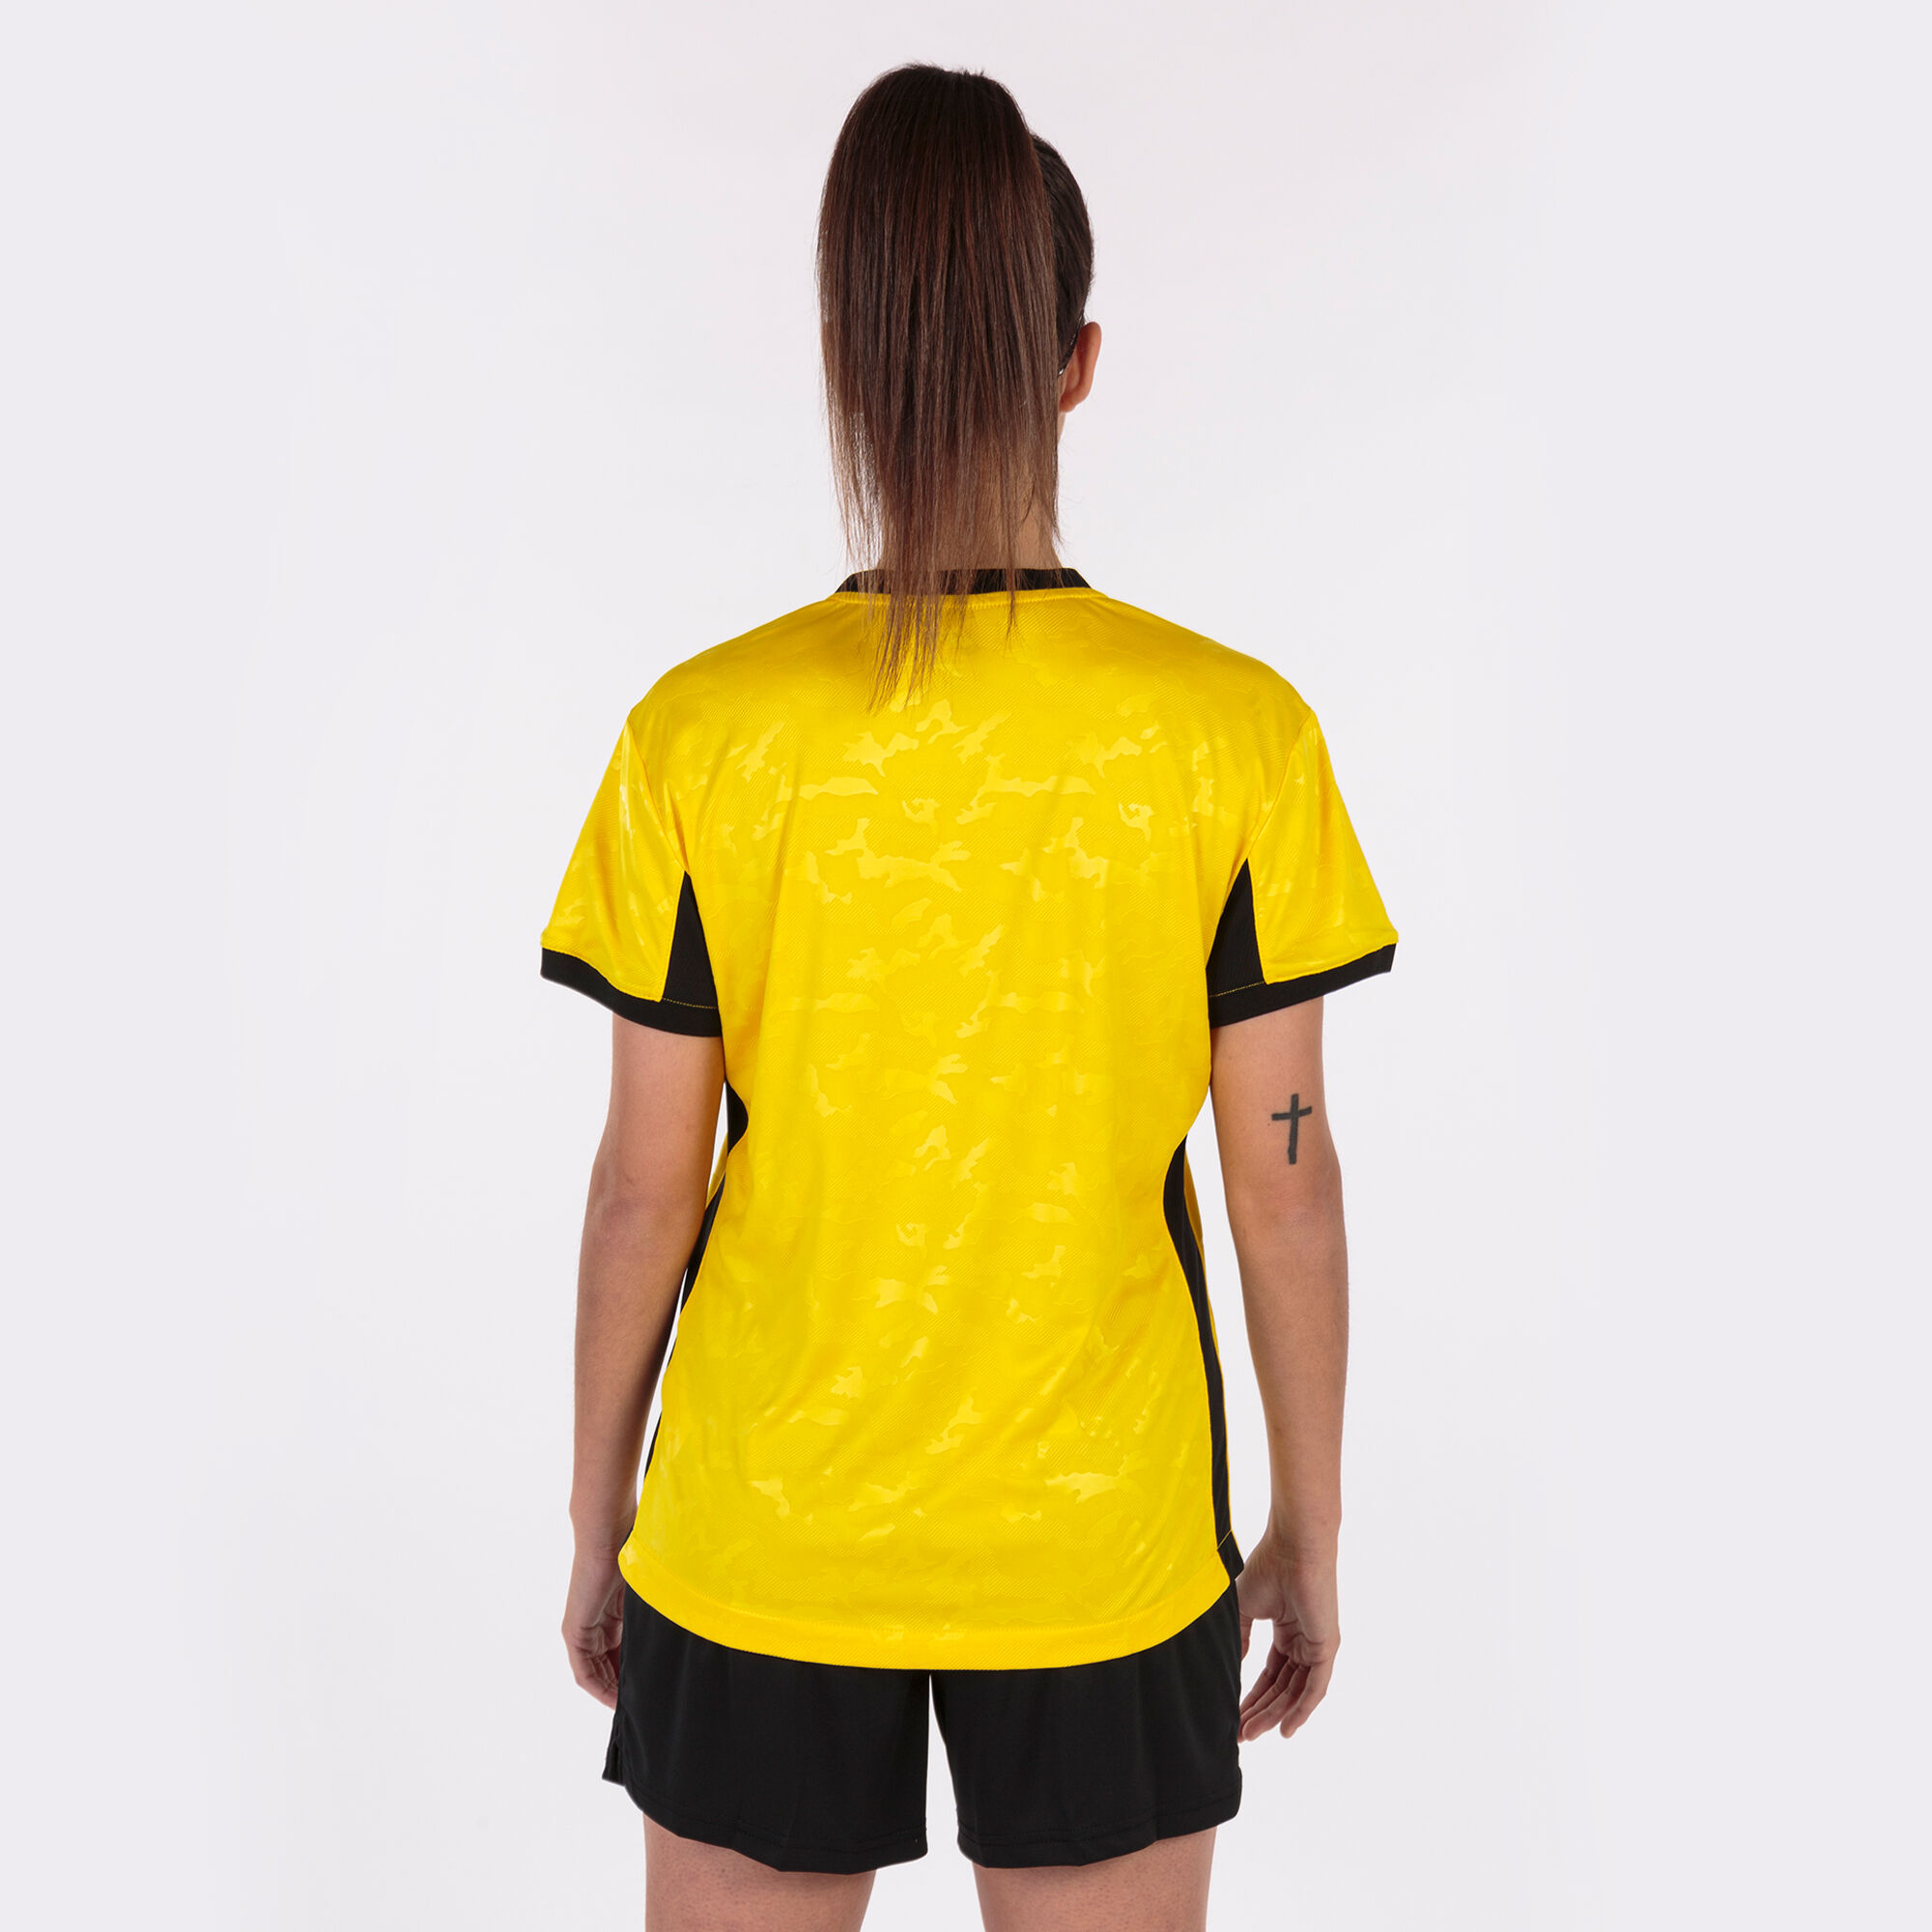 Camiseta manga corta mujer Toletum II amarillo negro